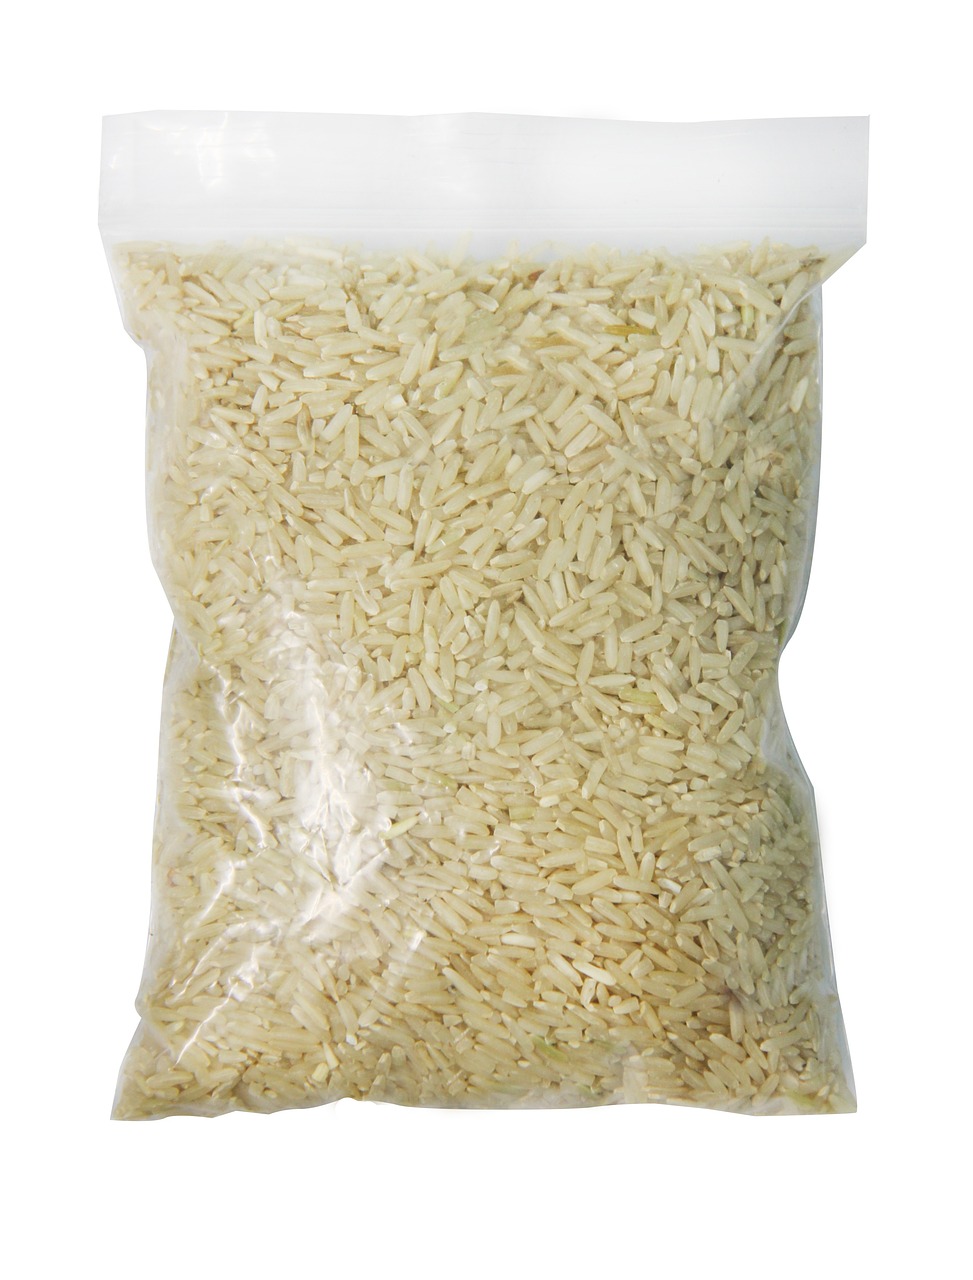 rice, bag, plastic